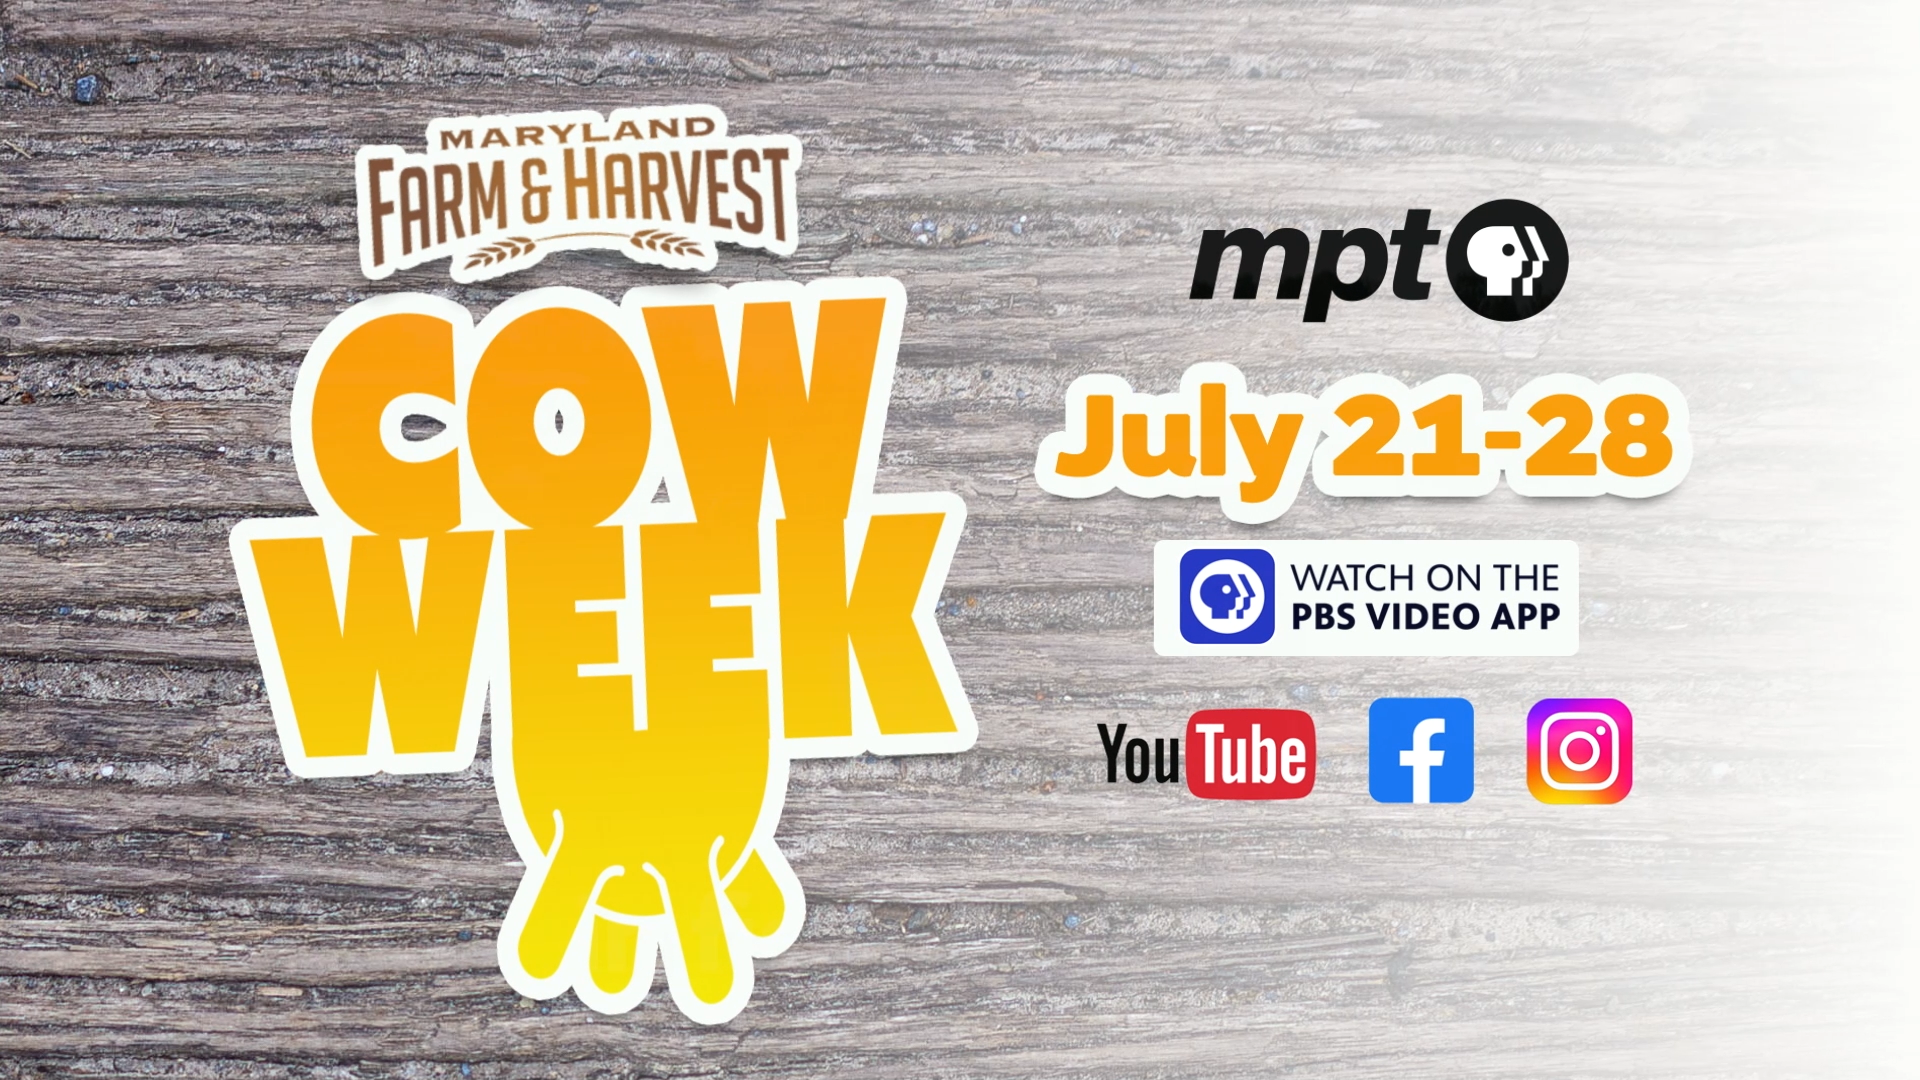 Maryland Farm & Harvest - Cow Week graphic 2